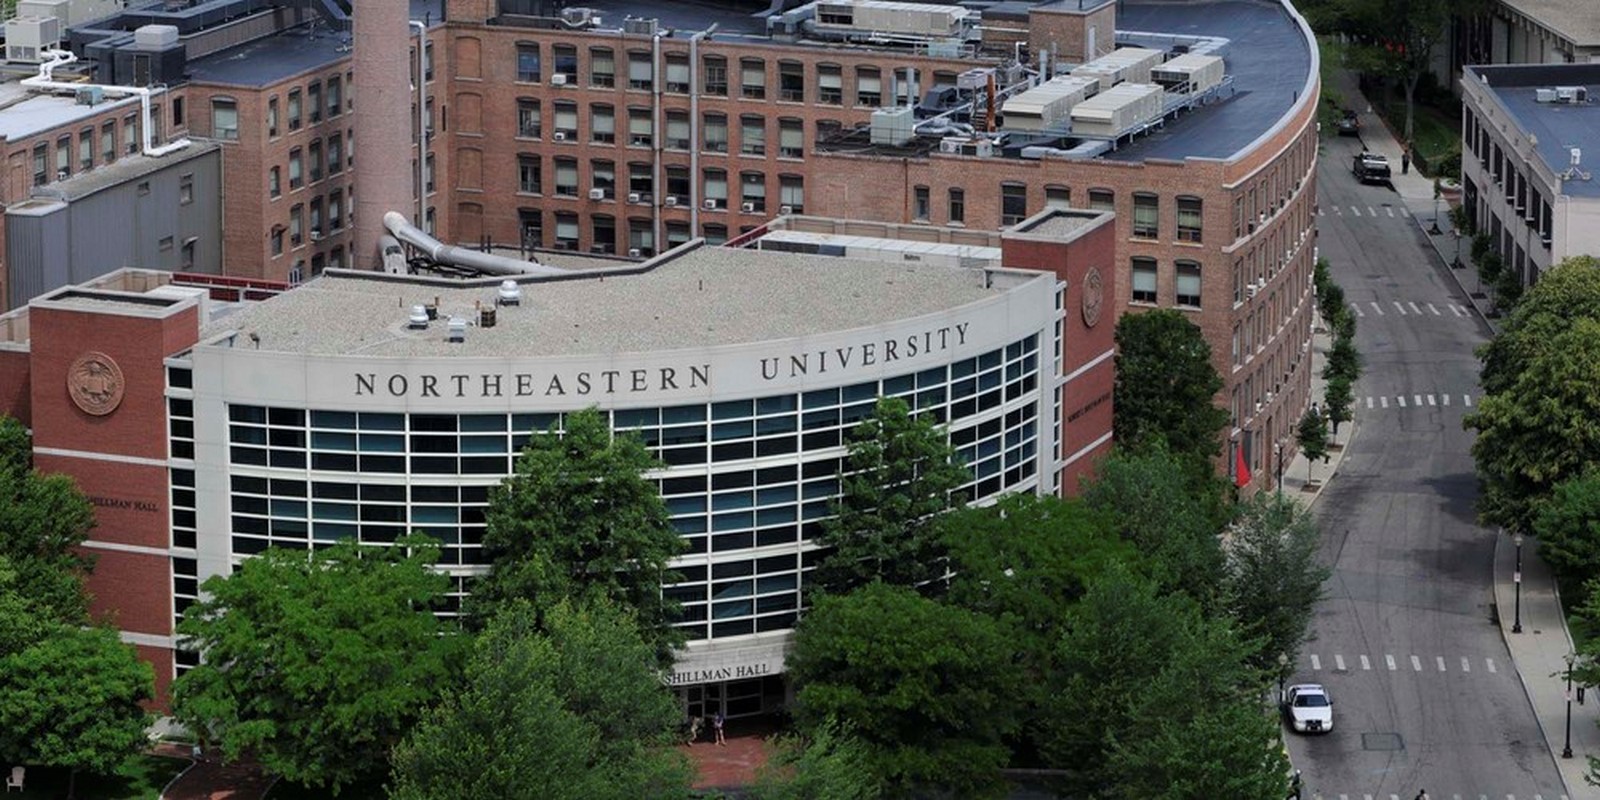 A1345 Undergraduate Architecture Schools In The U.S Northeastern University Image 1 